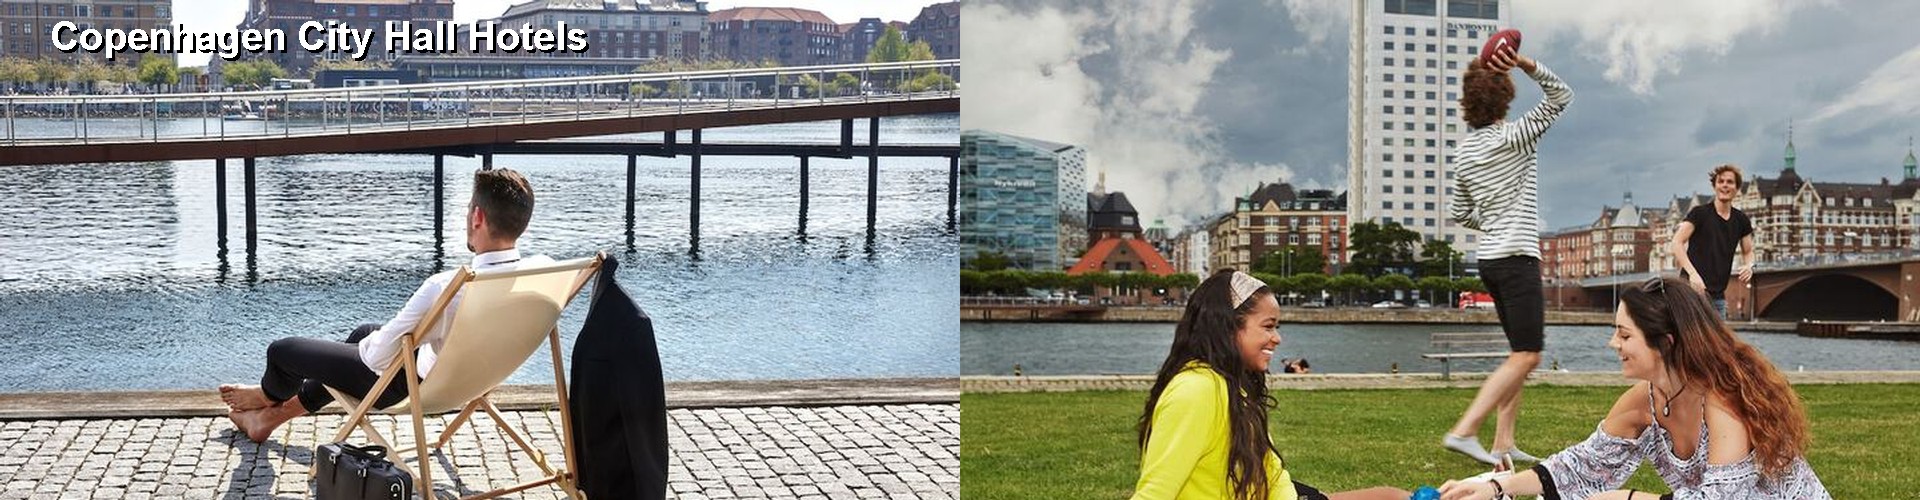 5 Best Hotels near Copenhagen City Hall